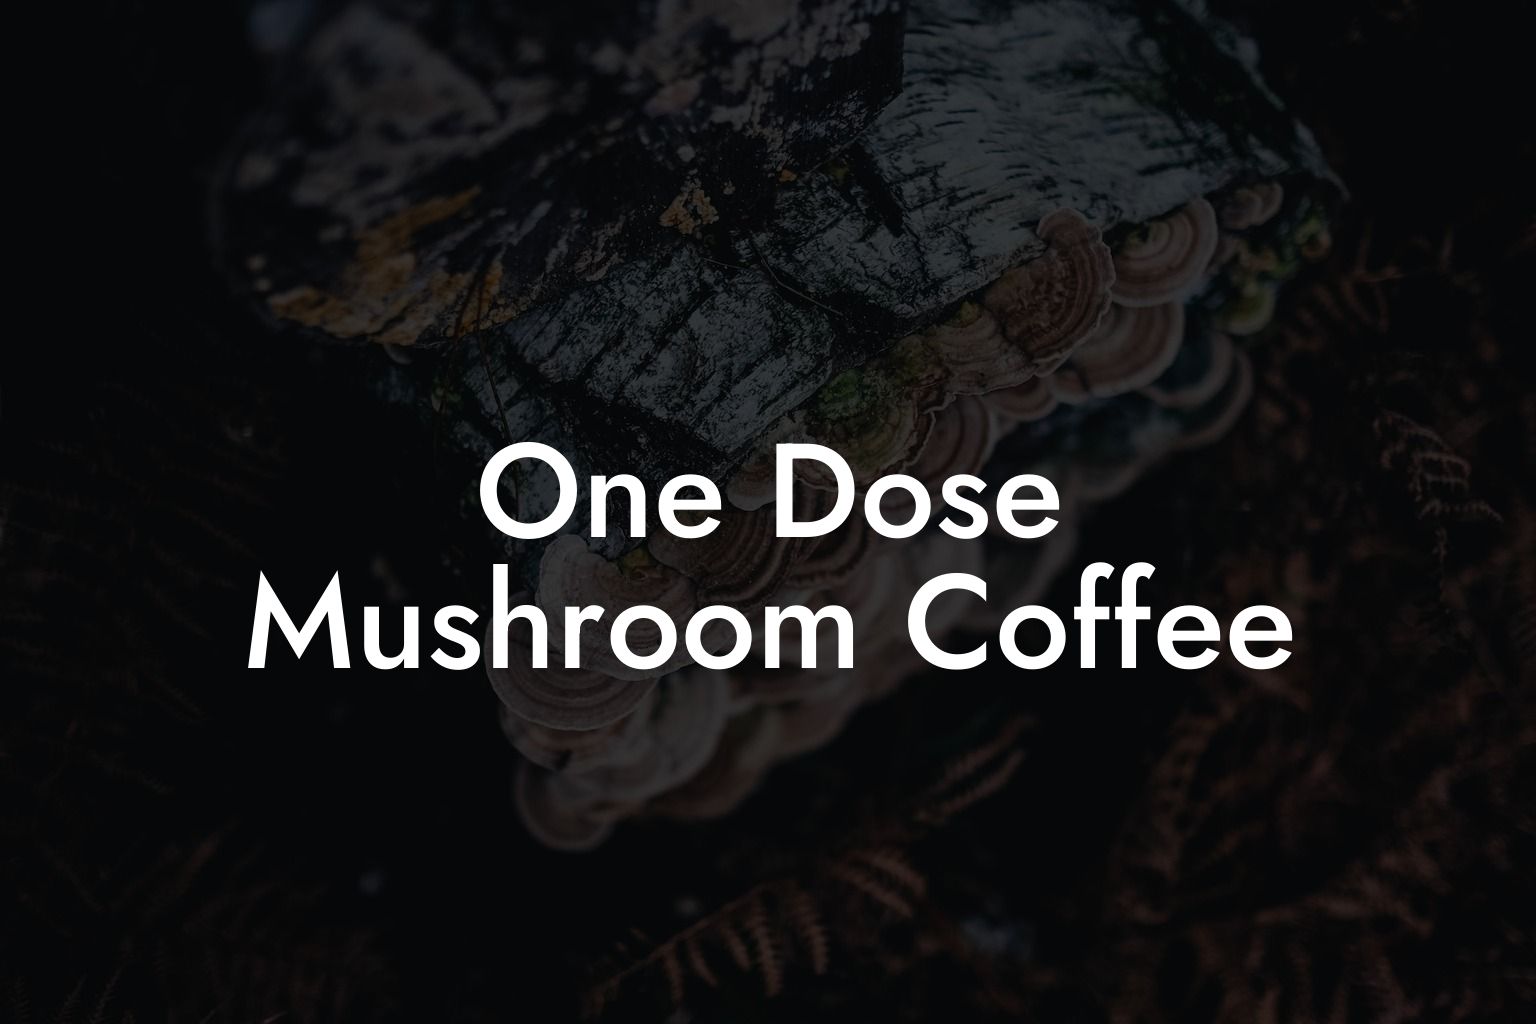 One Dose Mushroom Coffee